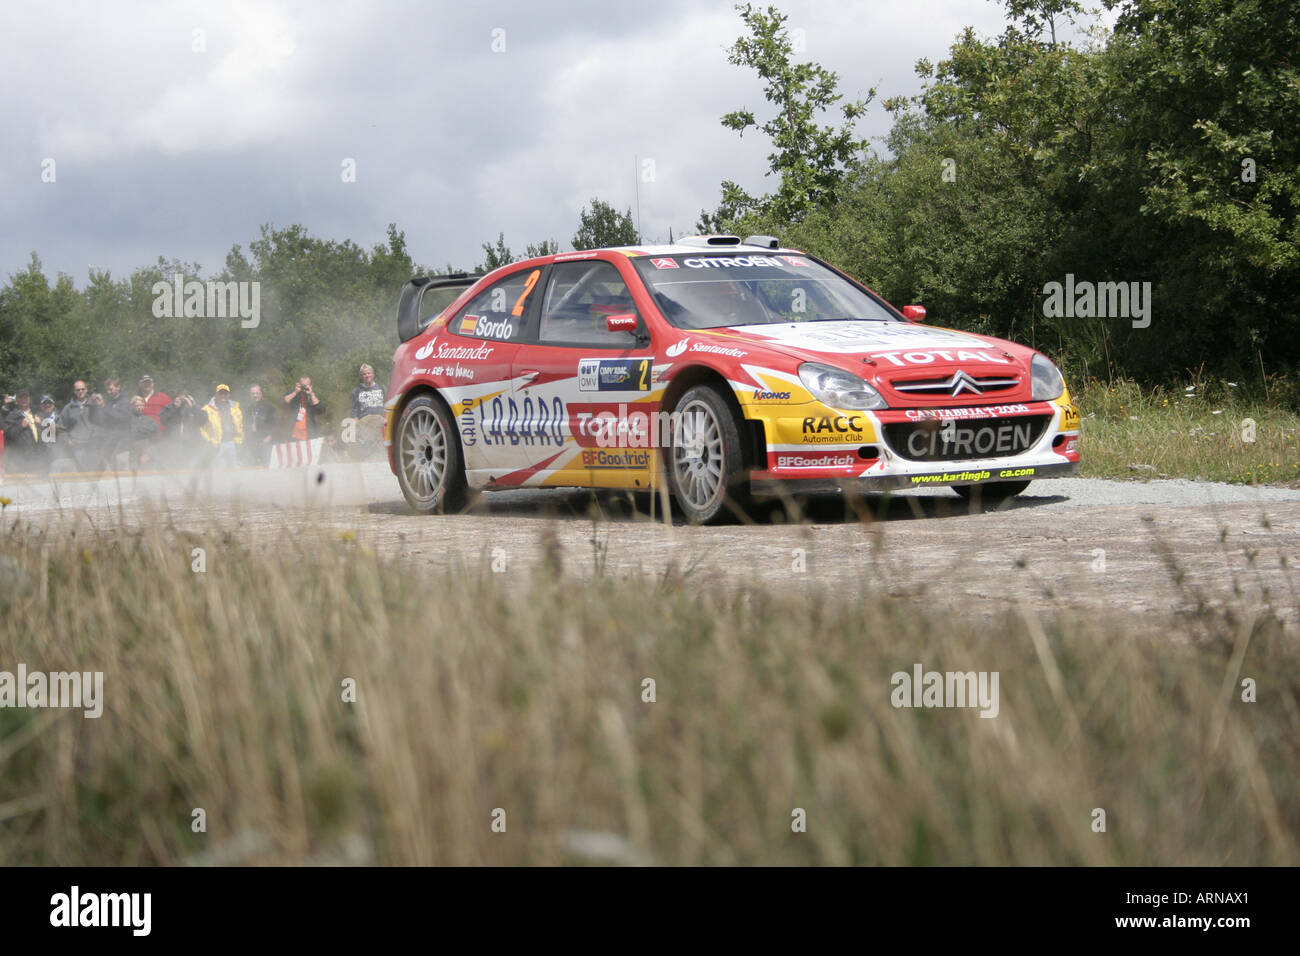 WRC Rallye WM Germany, number 2, Daniel Sordo / E Stock Photo